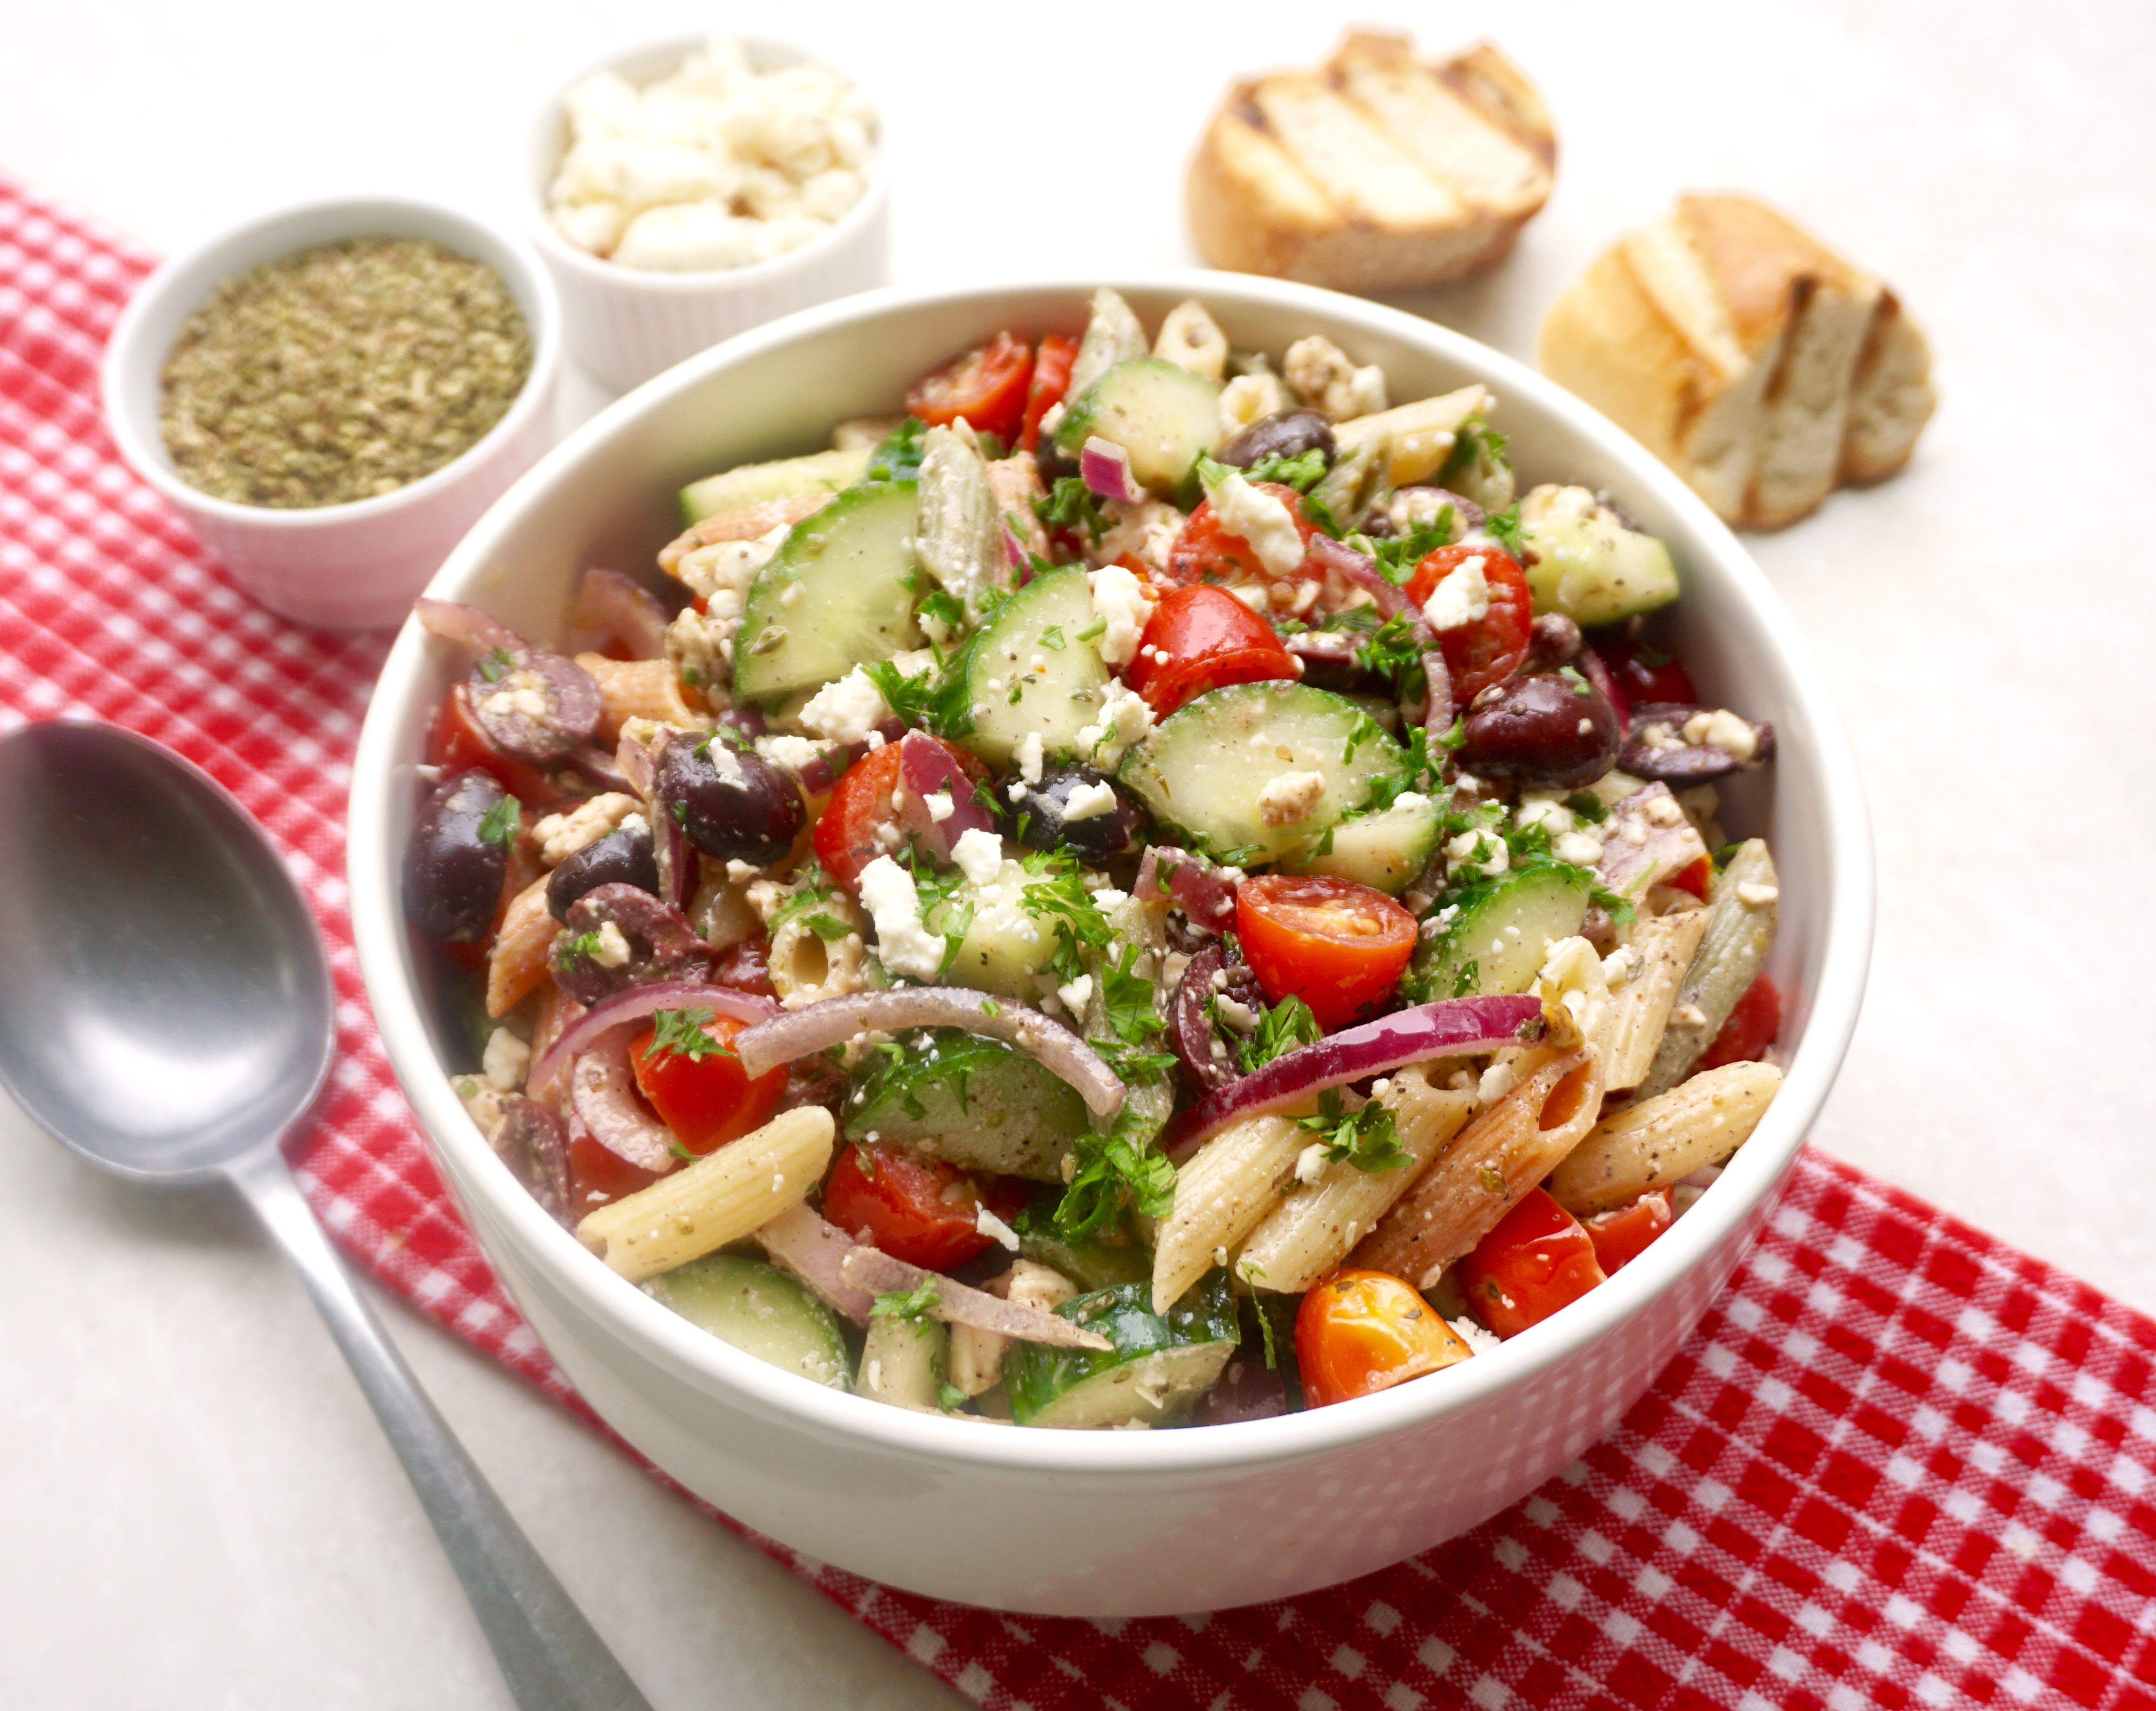 Mediterranean Pasta Salad is a healthy vegetarian salad